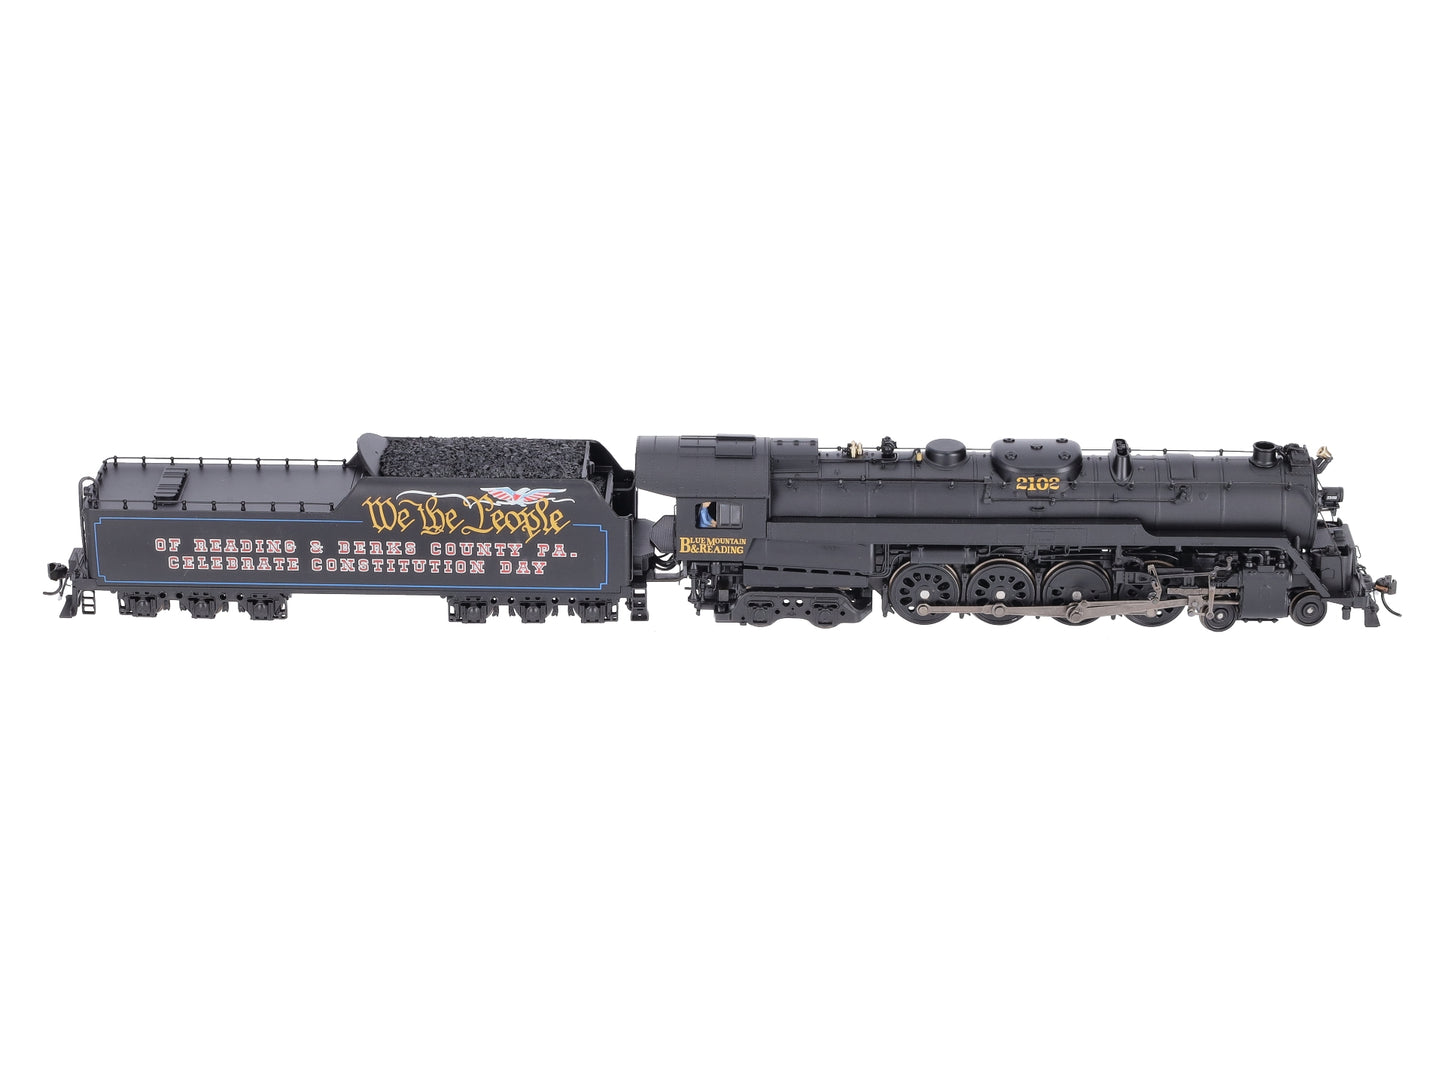 Broadway Limited 5778 HO RBM&N T1 4-8-4 Steam Locomotive #2102